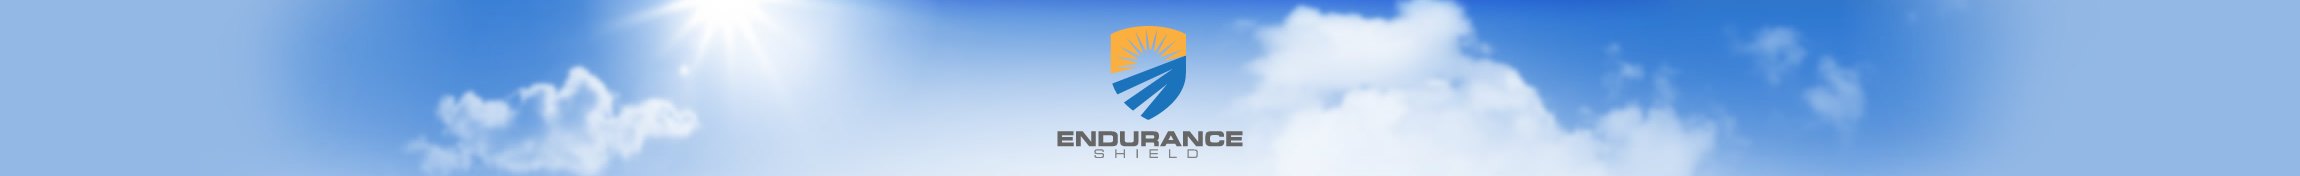 Endurance Shield